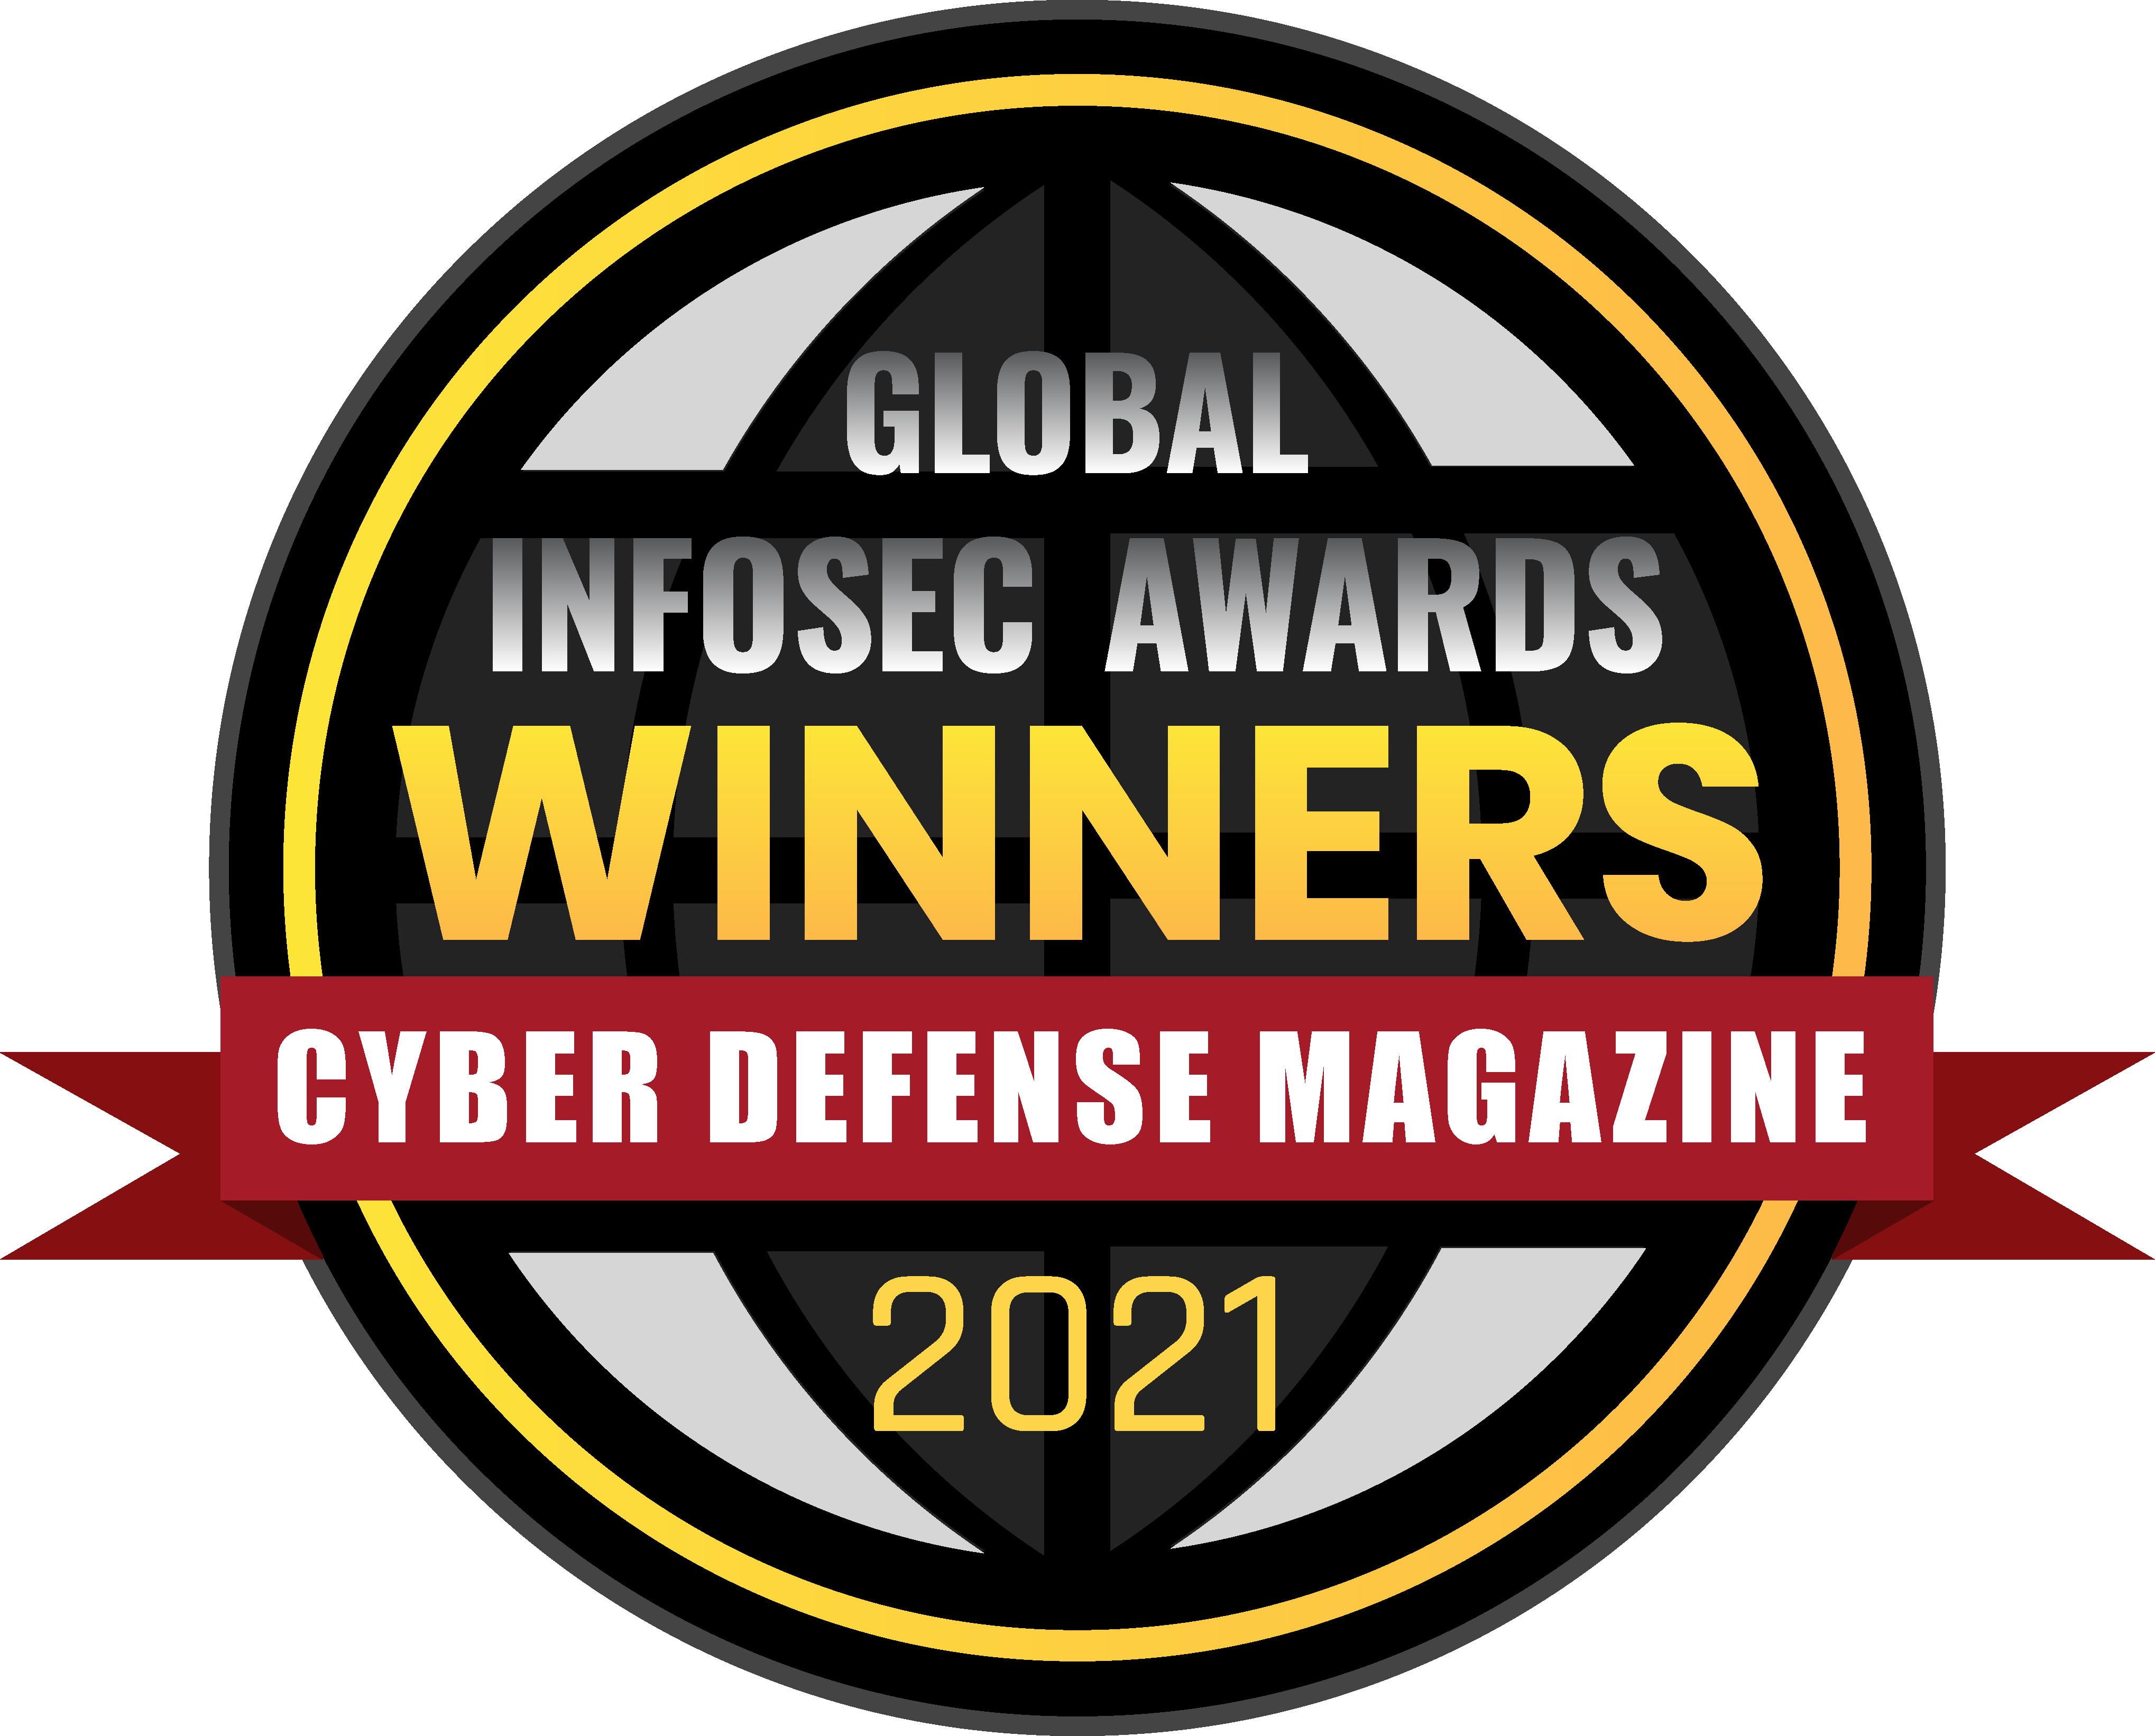 2021 Global Infosec Awards Winners - Cyber Defense Magazine